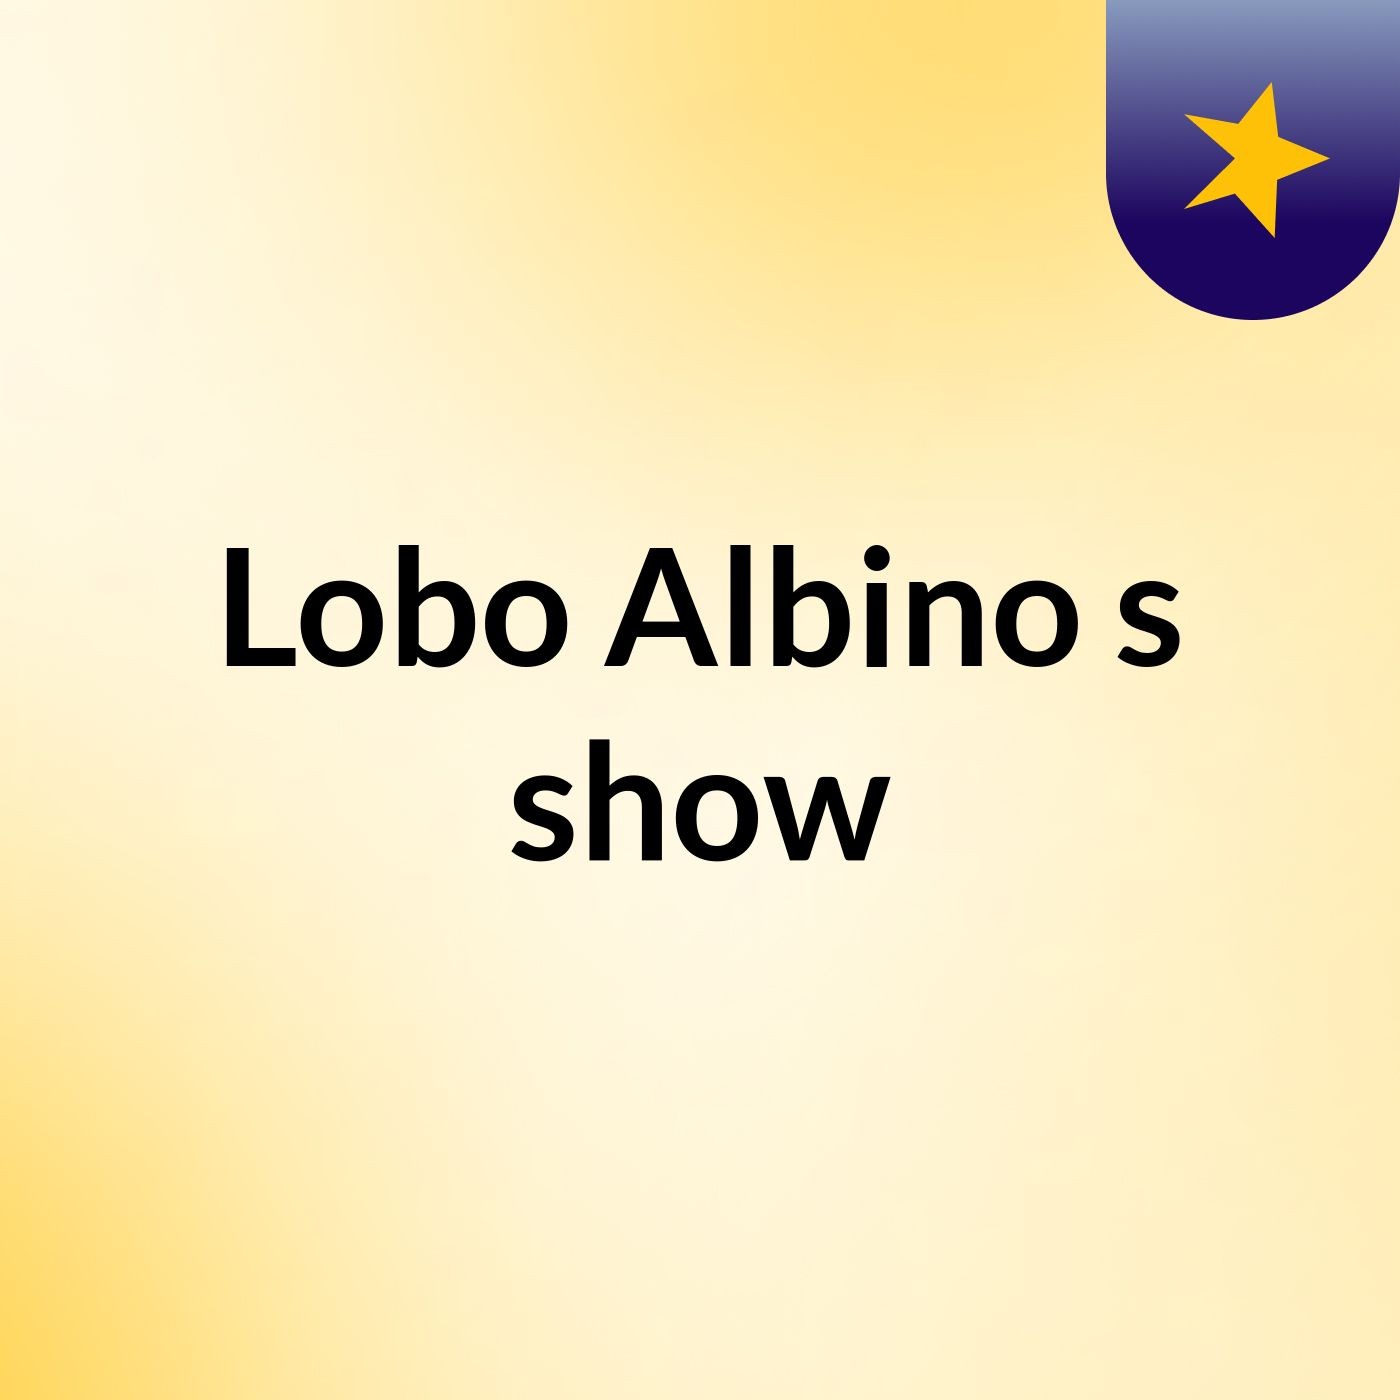 Lobo Albino's show